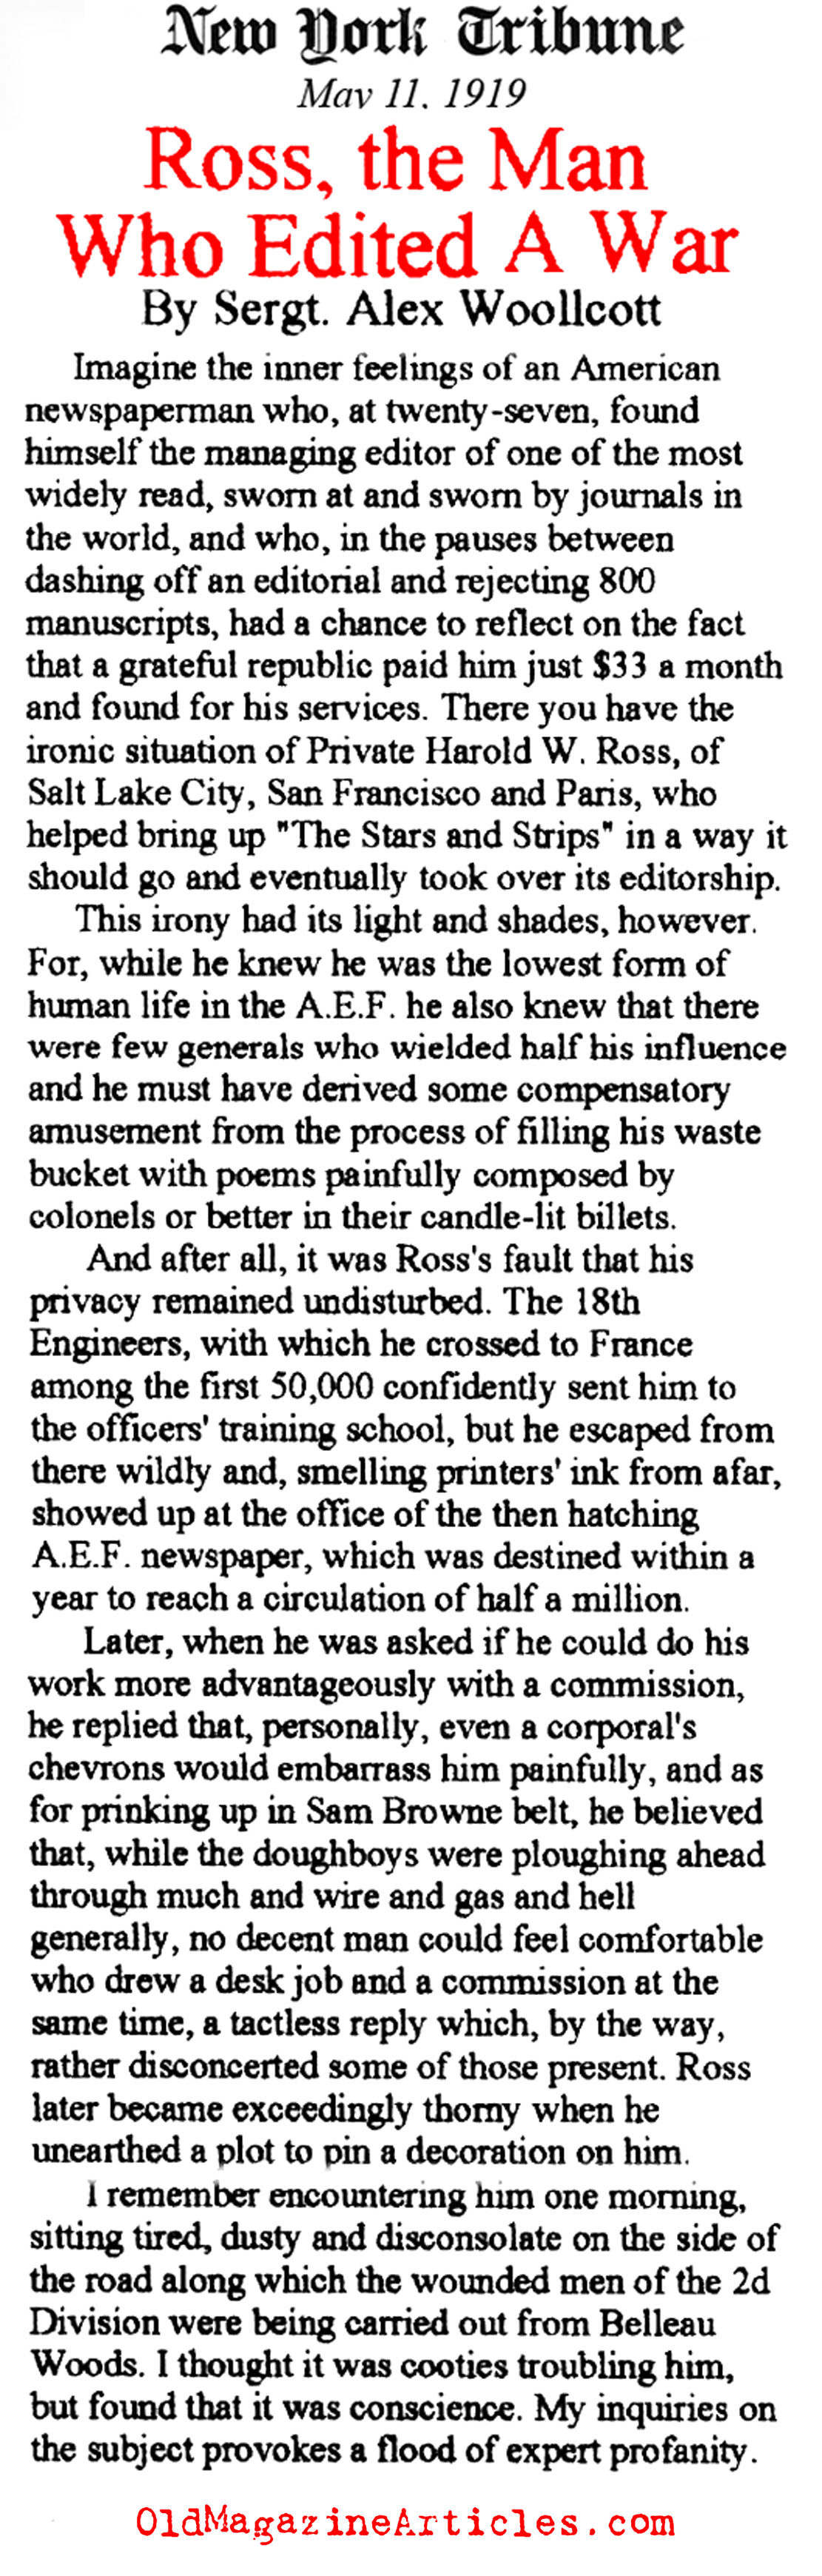 Harold Ross: Managing Editor of <I>  The Stars & Stripes</I>    (New York Tribune, 1919)